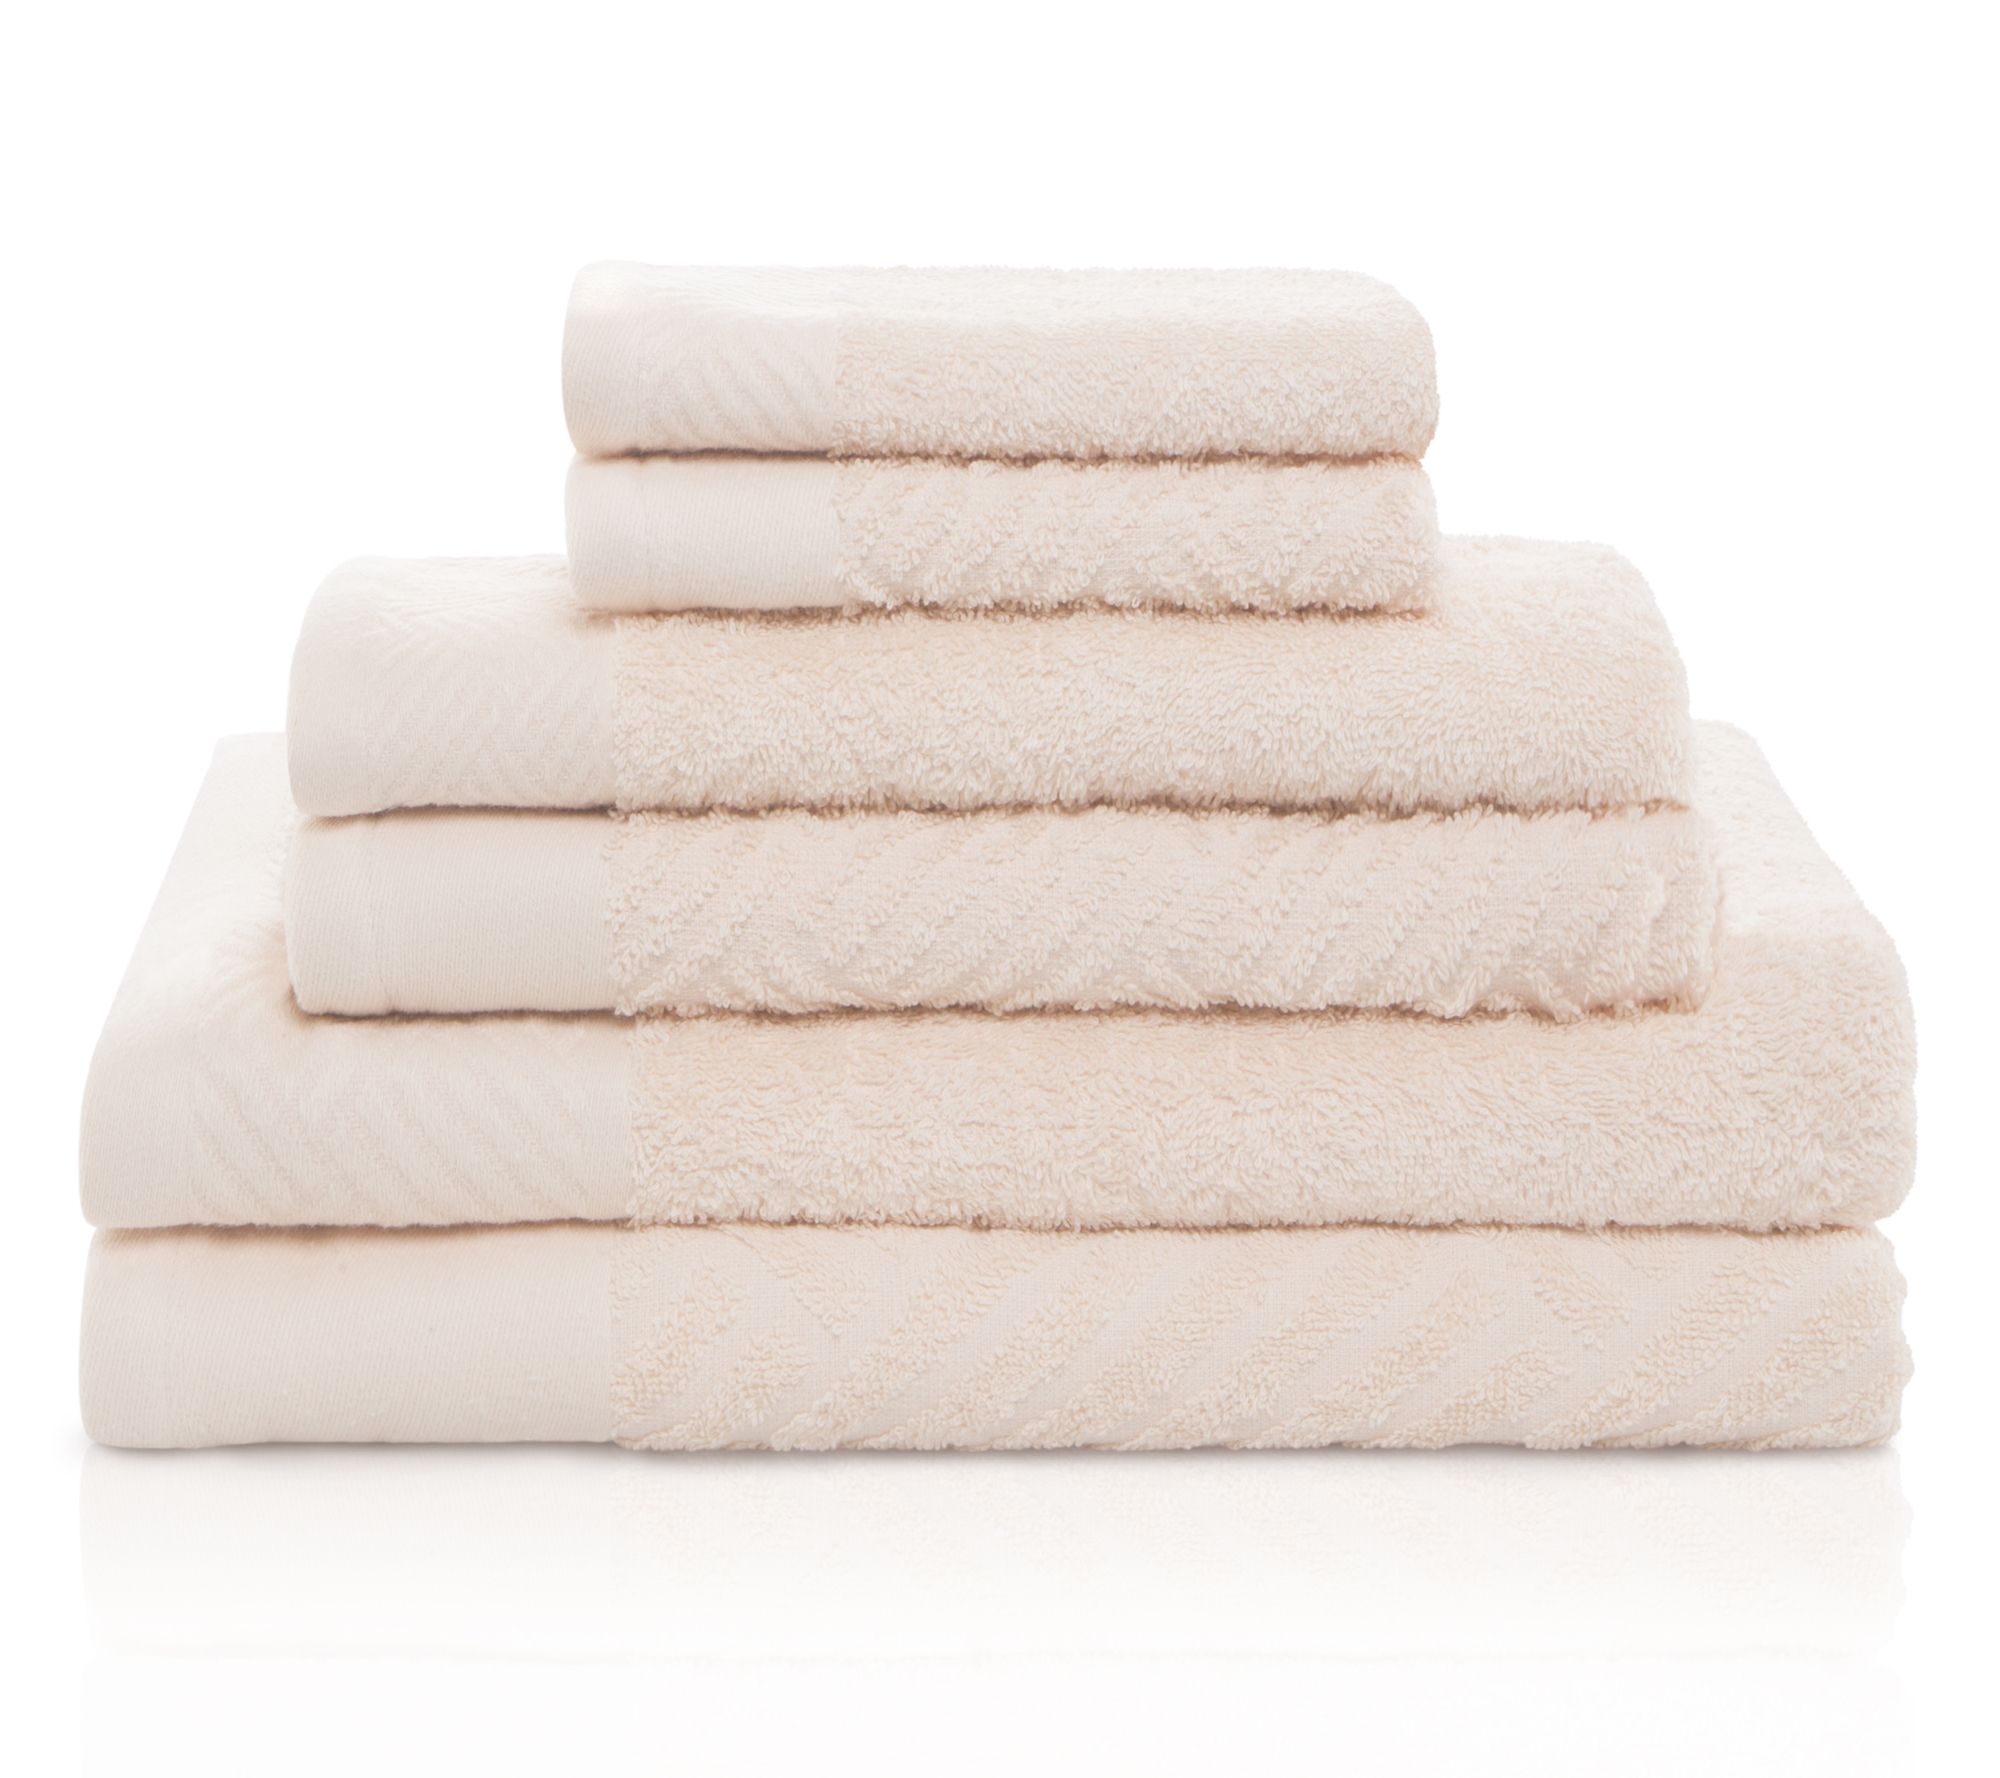  SUPERIOR Egyptian Cotton 6-Piece Towel Set, Bathroom